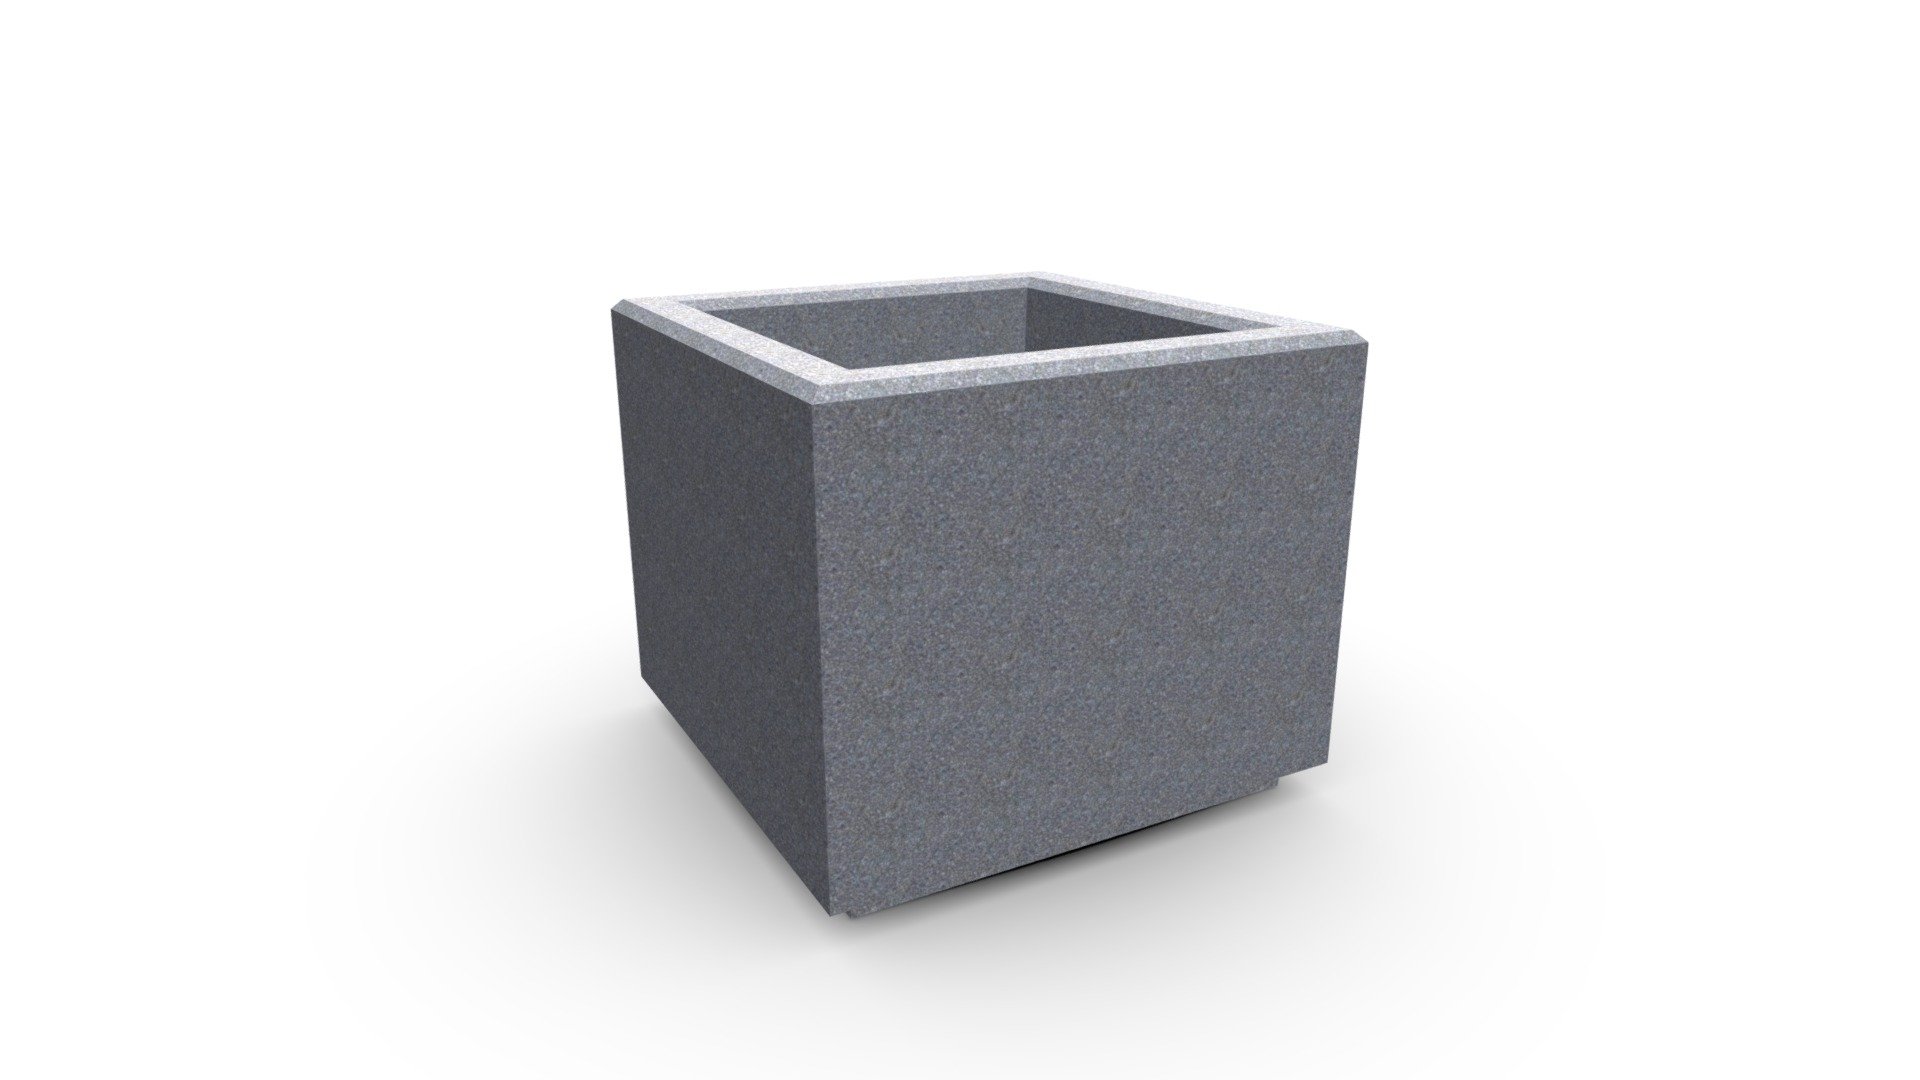 Betona puķu pods - Concrete flower pot - PB-03 - 3D model by RGRpluss 3d model